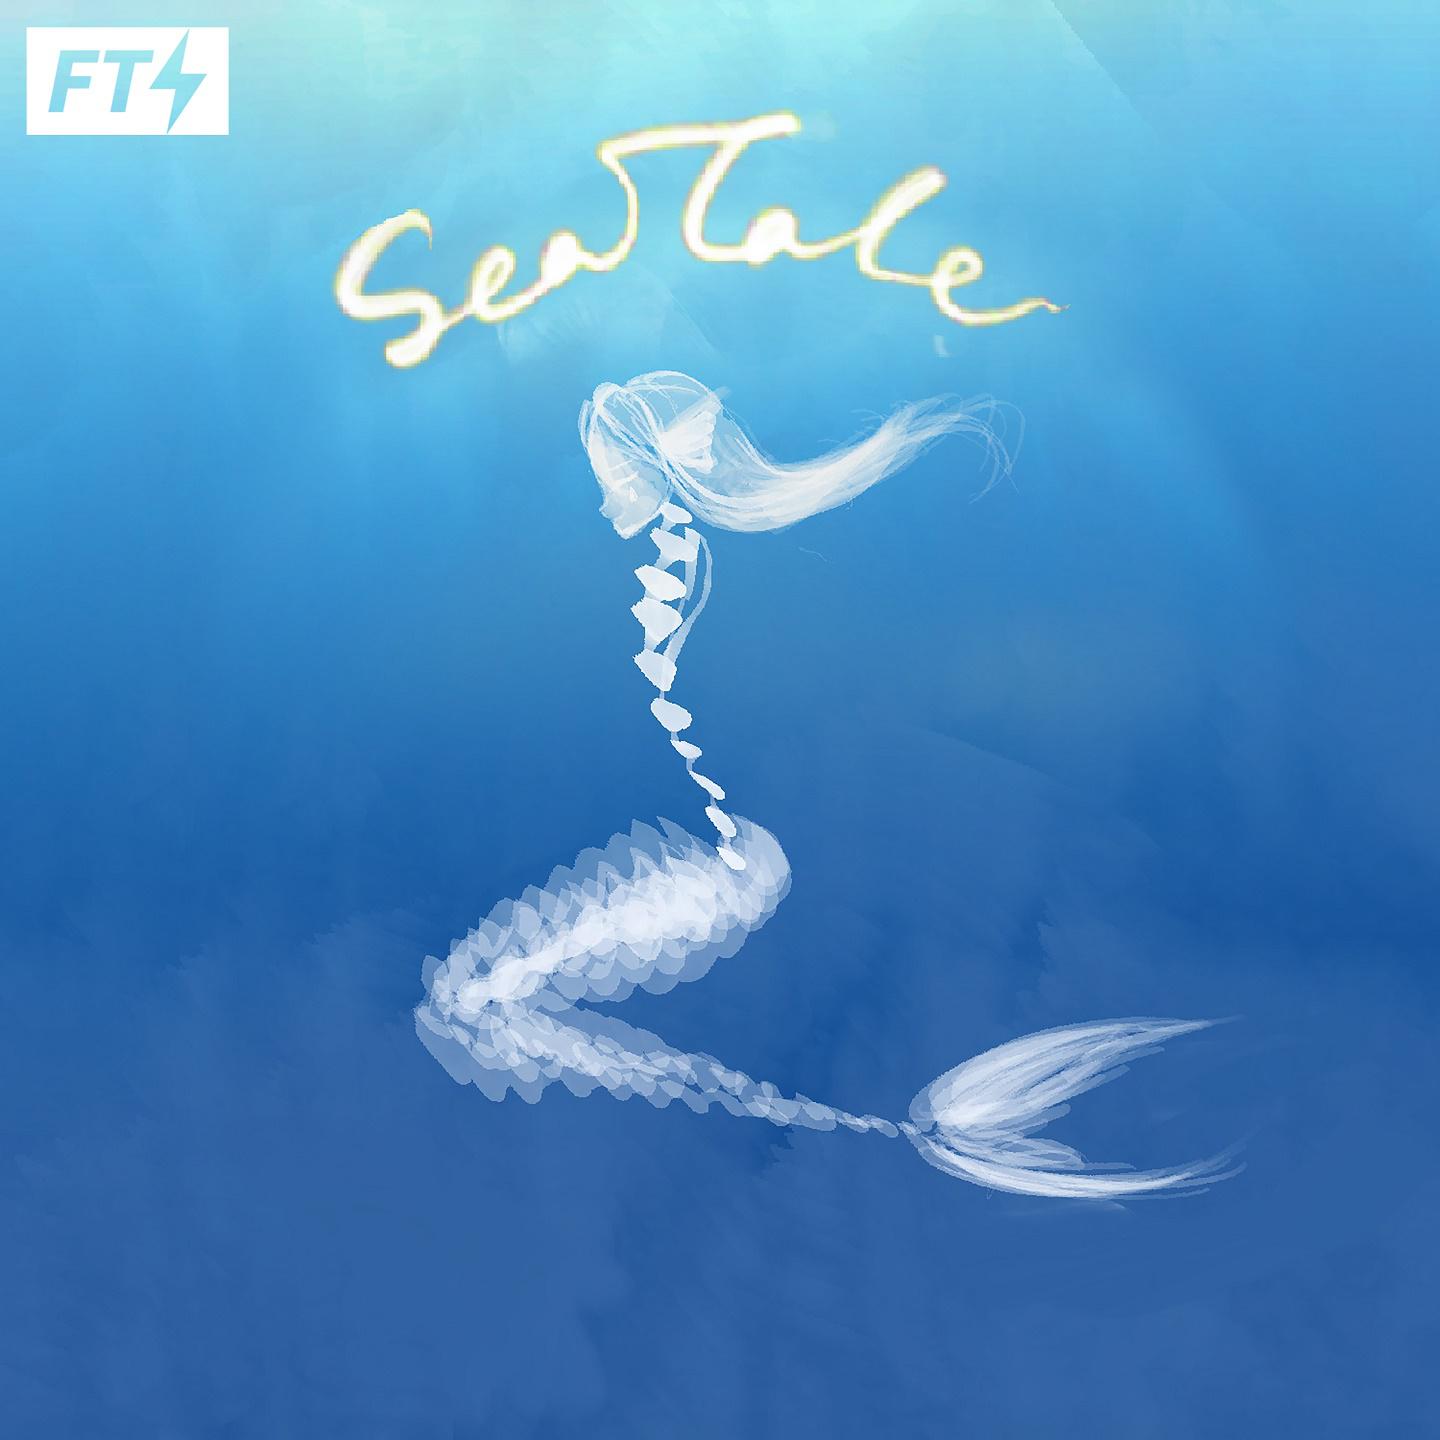 Постер альбома Sea Tale